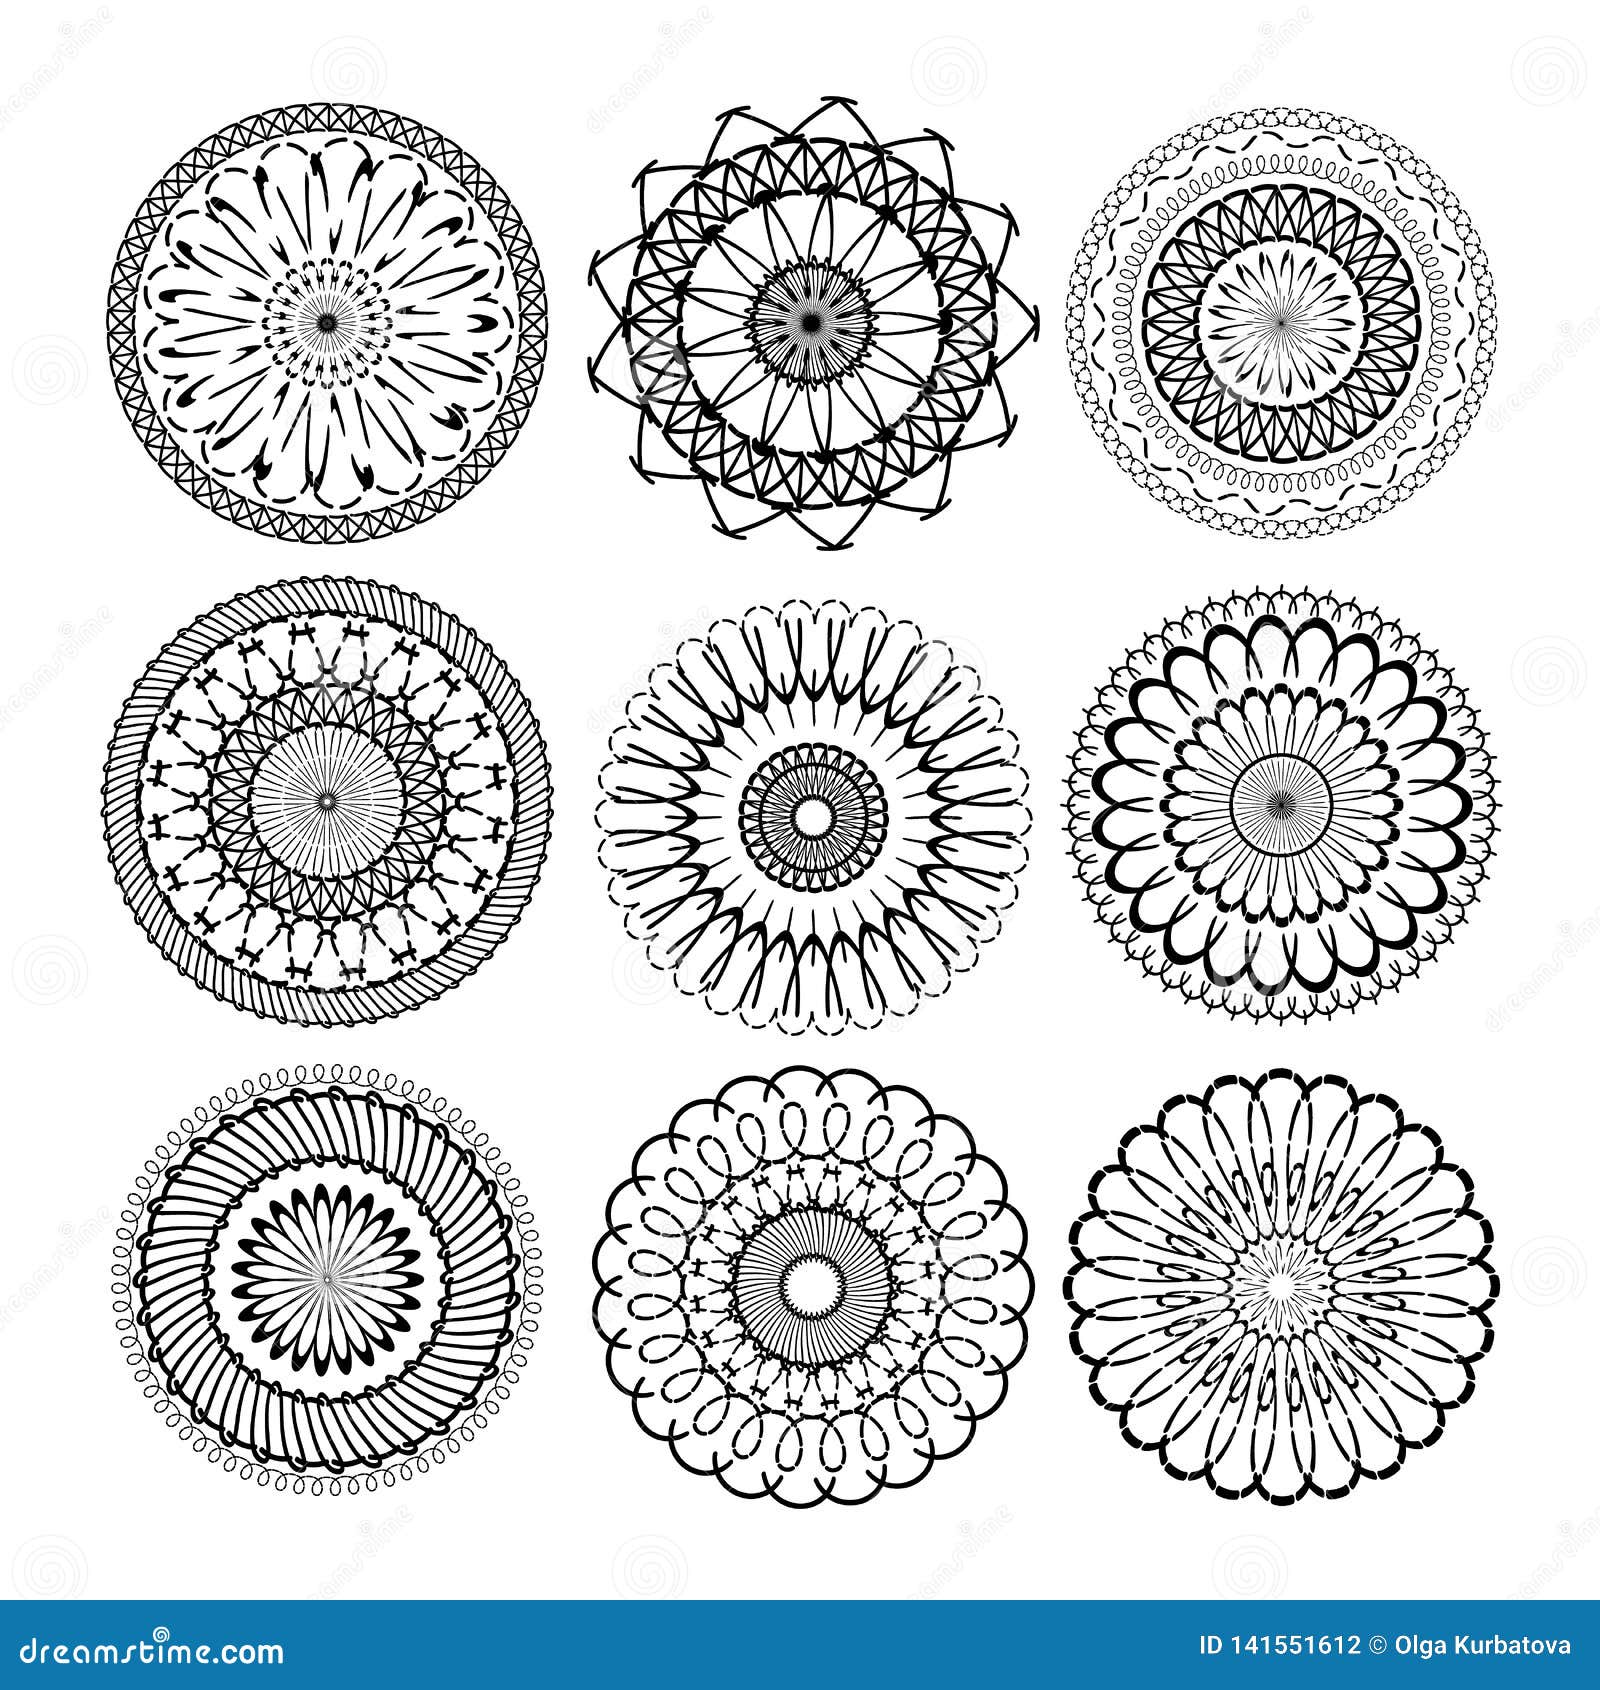 Mandala Abstract Ethnic Model Mandalas Mandalas with Repeat Geometric Circle Round Ornament Stock Vector Illustration of eastern, ethnic: 141551612